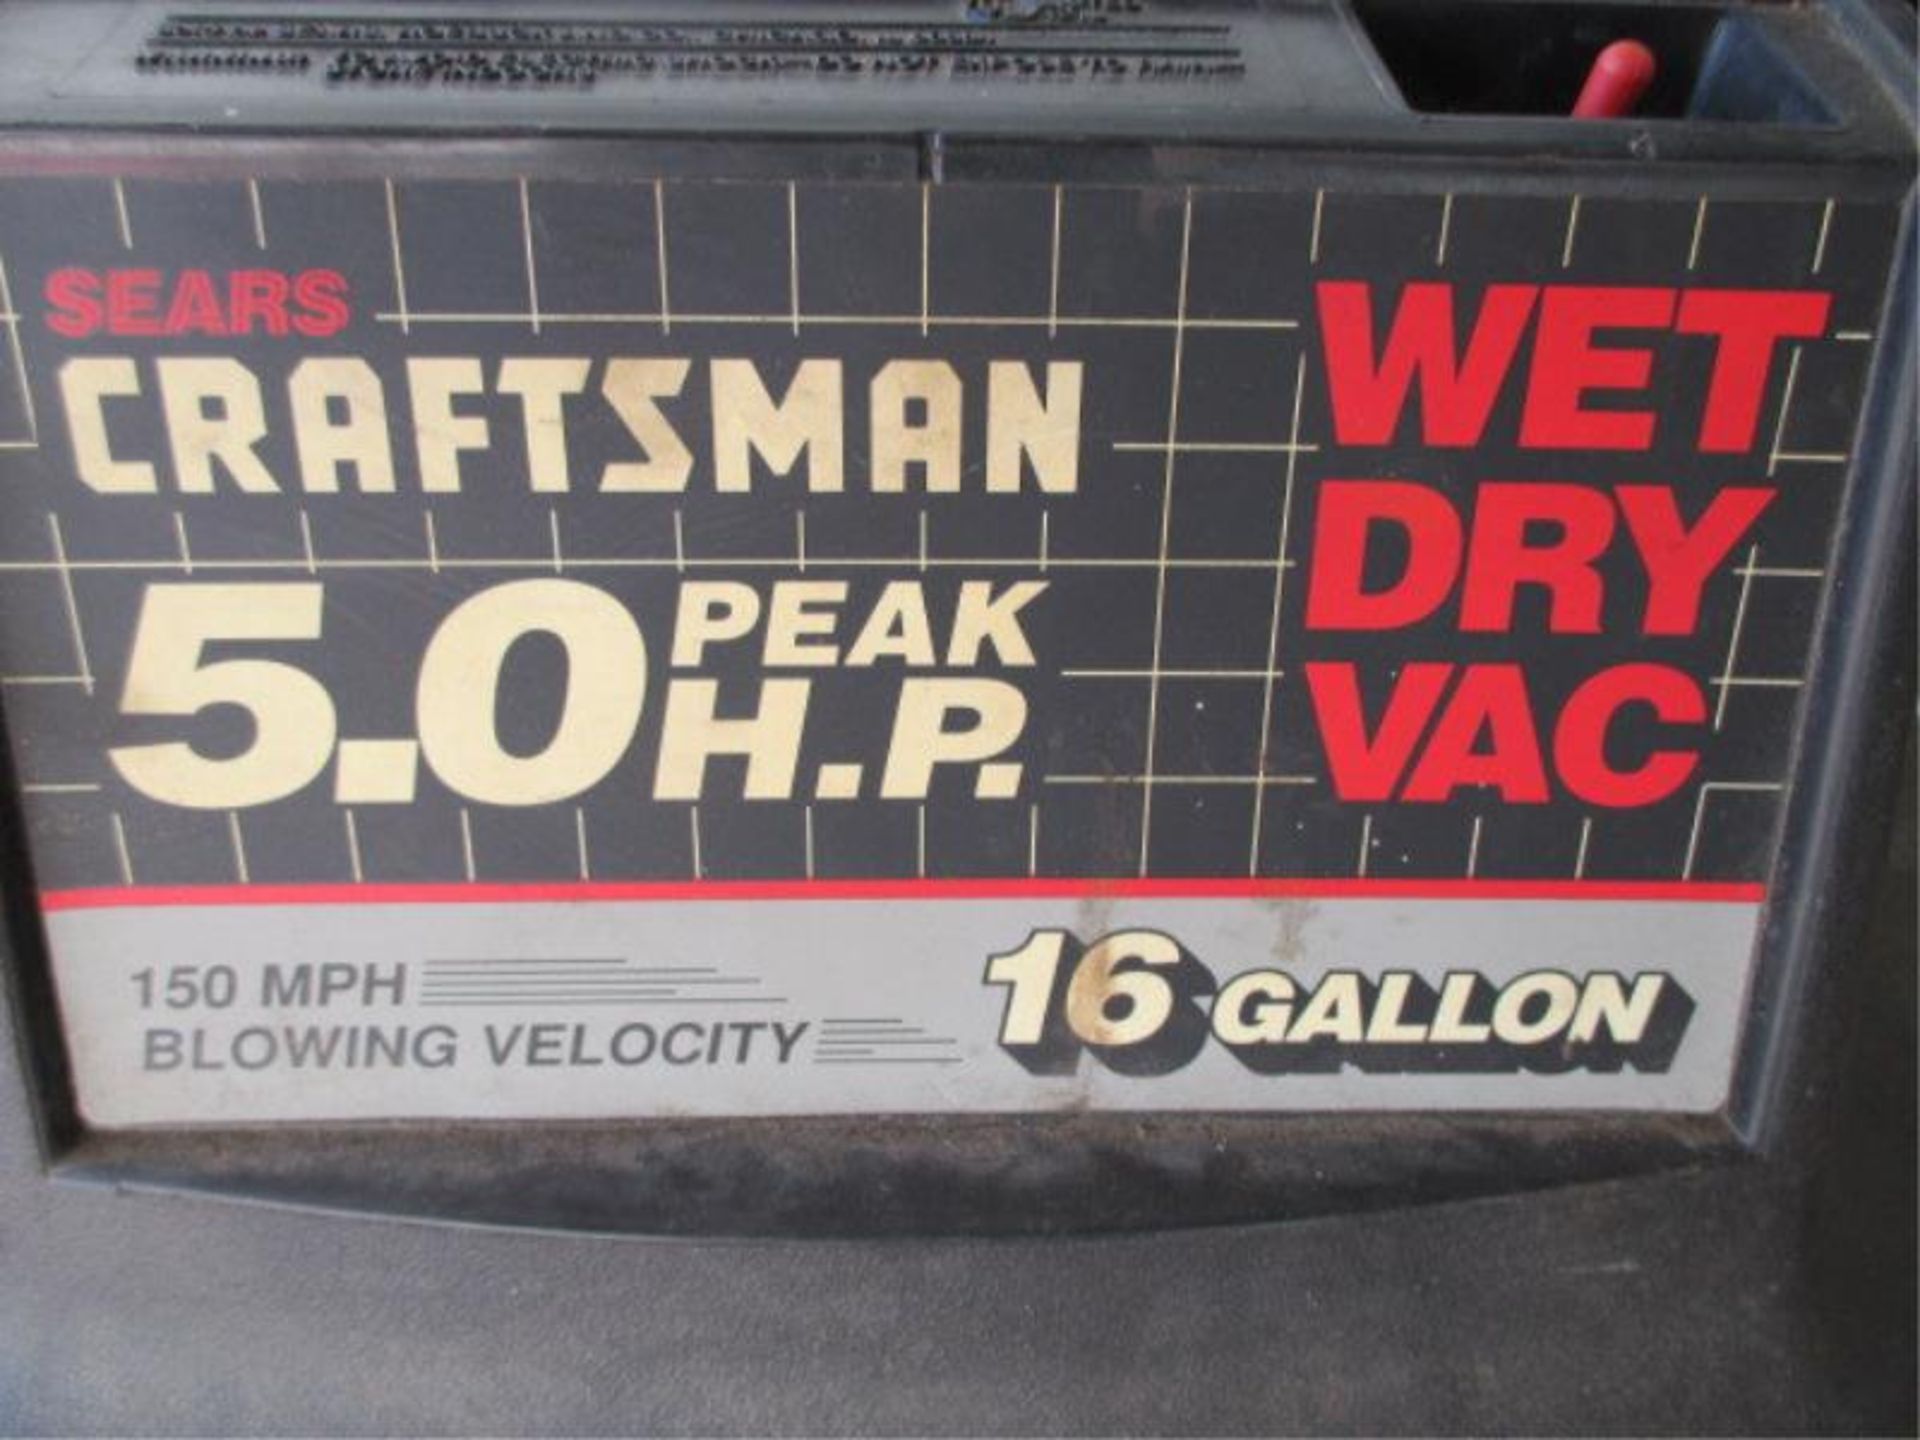 Crafsman Wet / Dry Vac, 18 Gallon, 5.0 Peak HP, 150 Blower MPH, Black, No Hose 150 Blower MPH, - Image 4 of 11